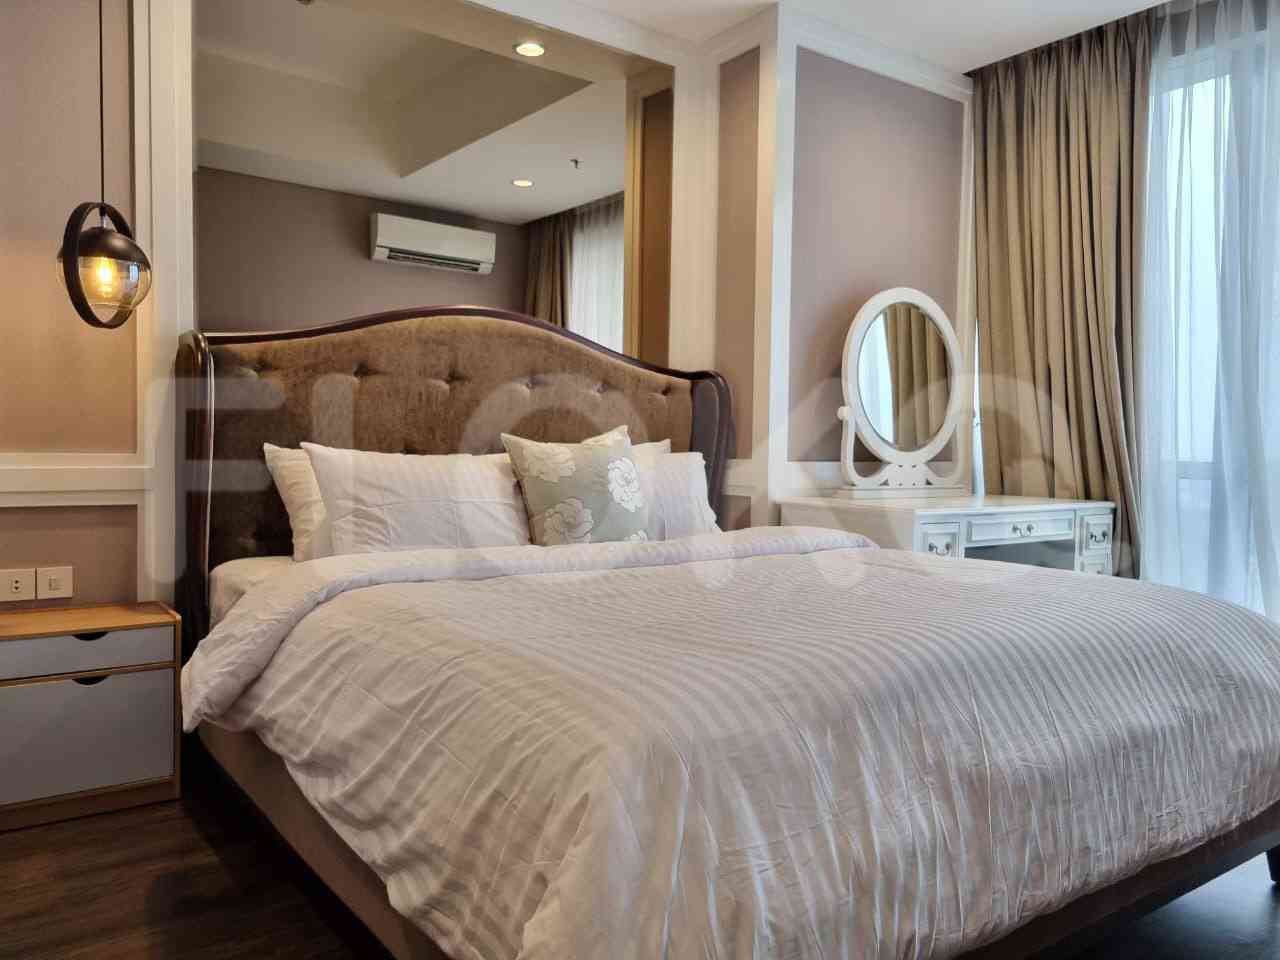 2 Bedroom on 16th Floor for Rent in Apartemen Branz Simatupang - ftb57f 2